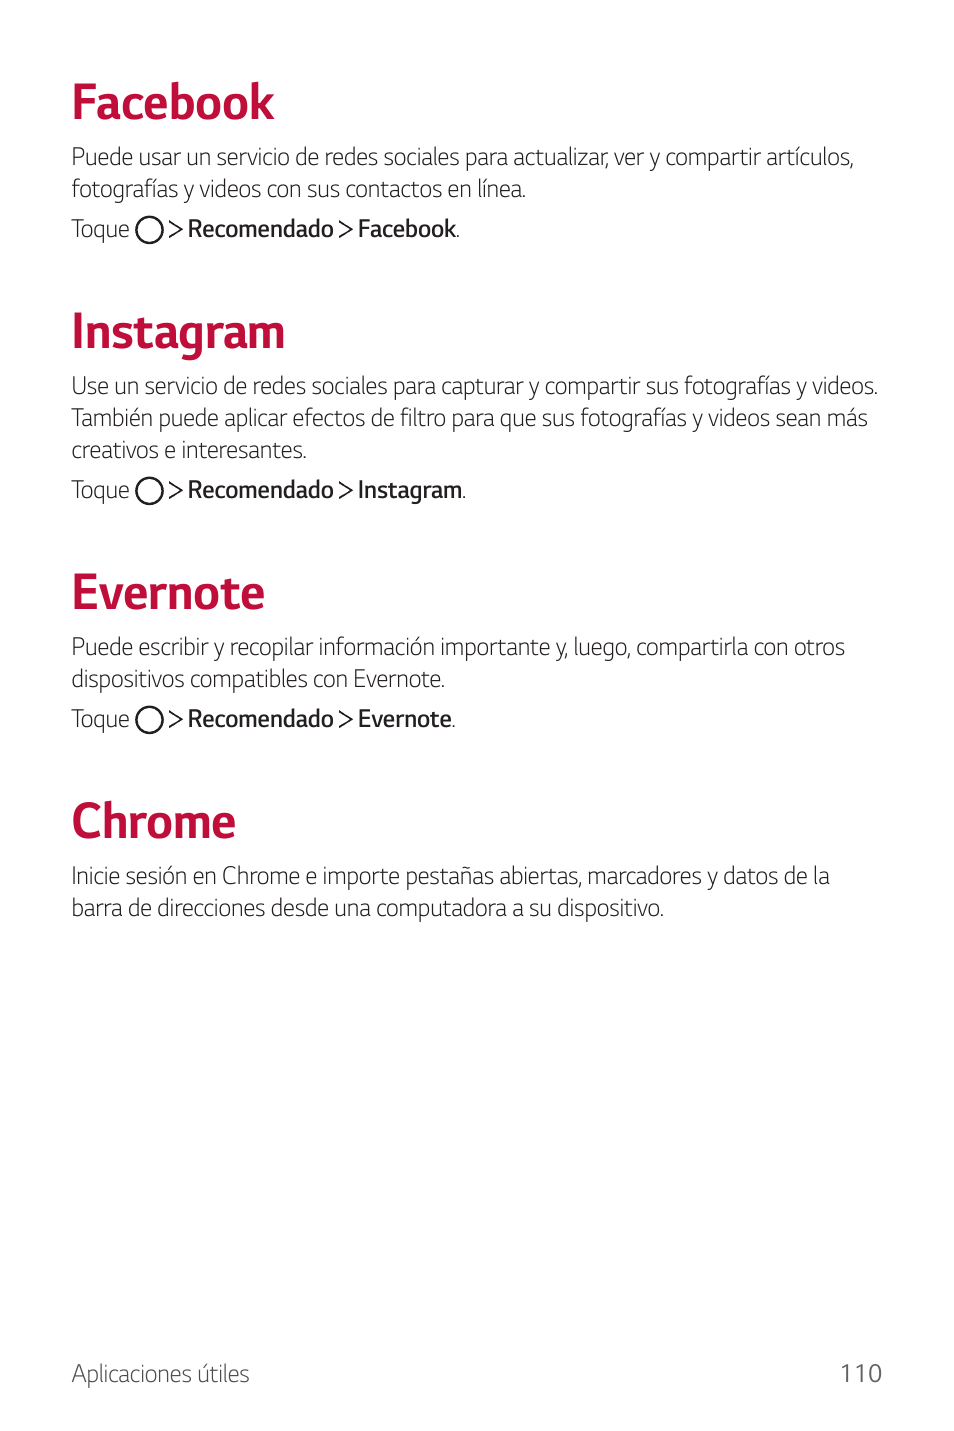 Facebook, Instagram, Evernote | Chrome | LG G6 H872 Manual del usuario | Página 111 / 185